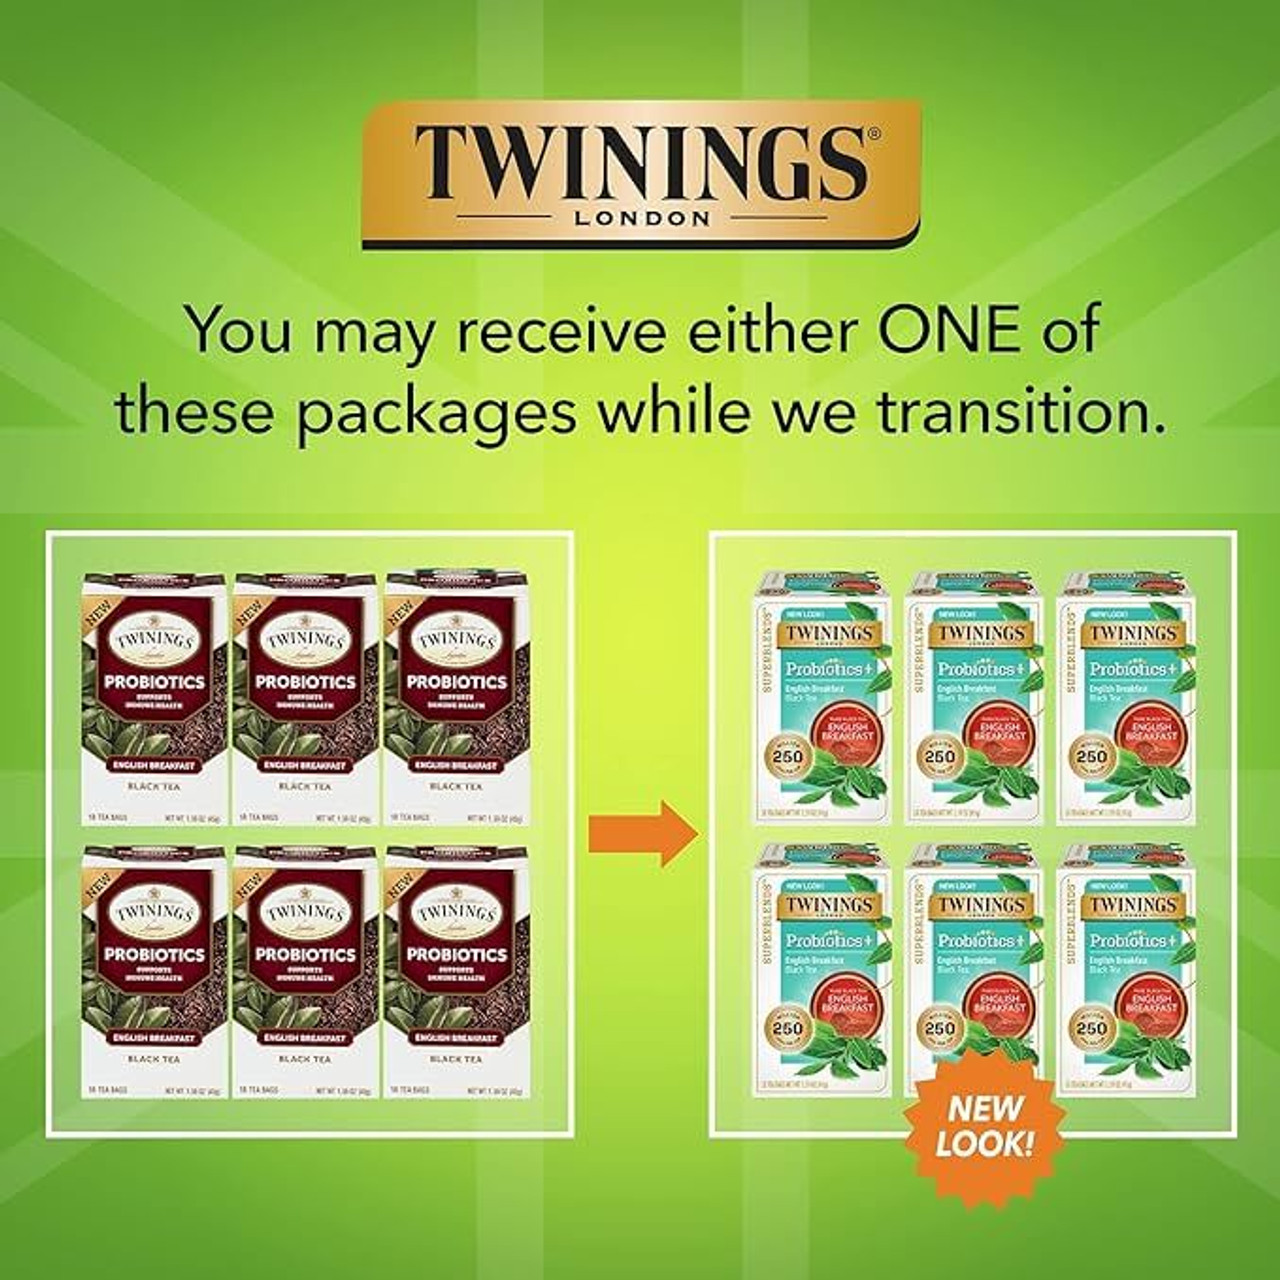 Twinings Probiotics English Breakfast Premium BlendTea - 18/Box(6/CASE)-Chicken Pieces